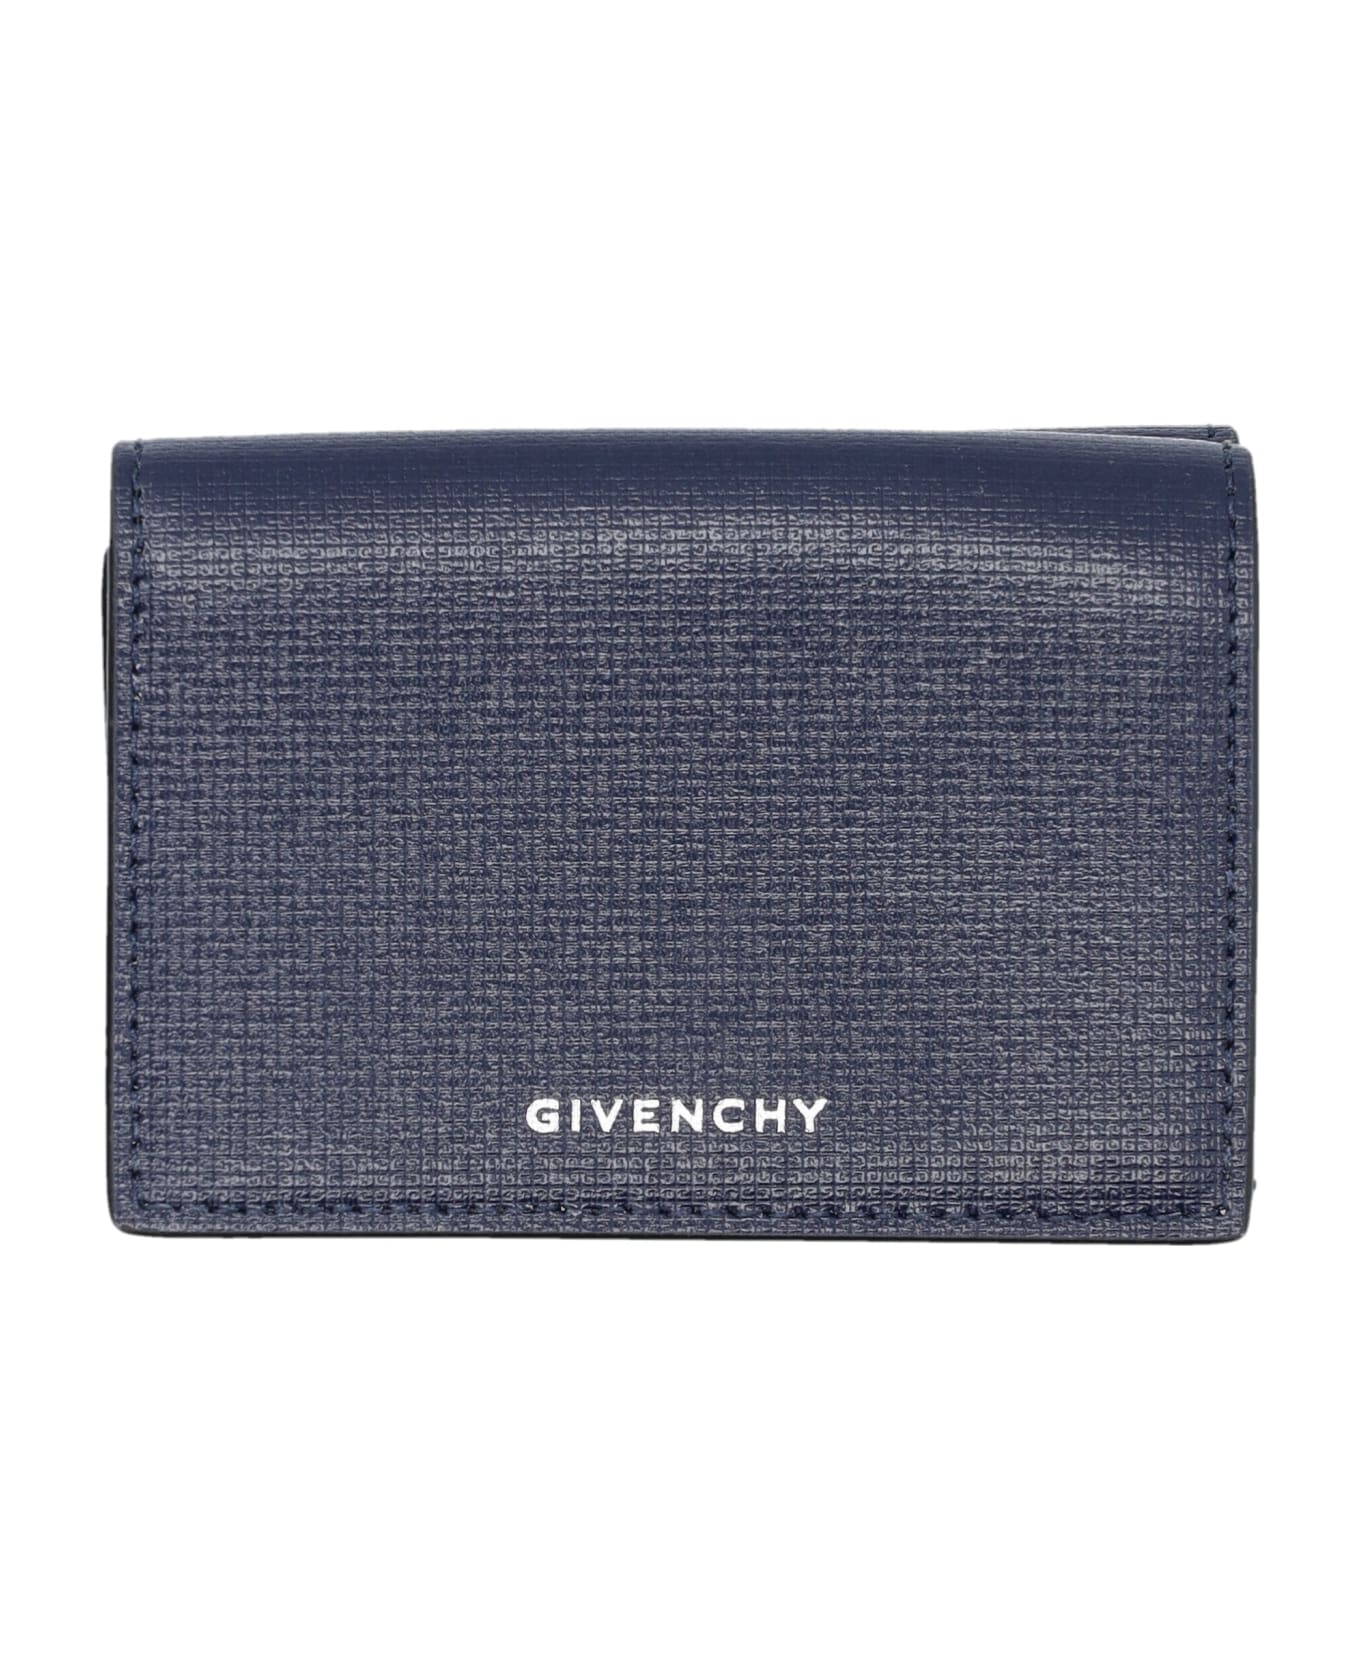 Givenchy Compact Wallet - NAVY/BLACK 財布